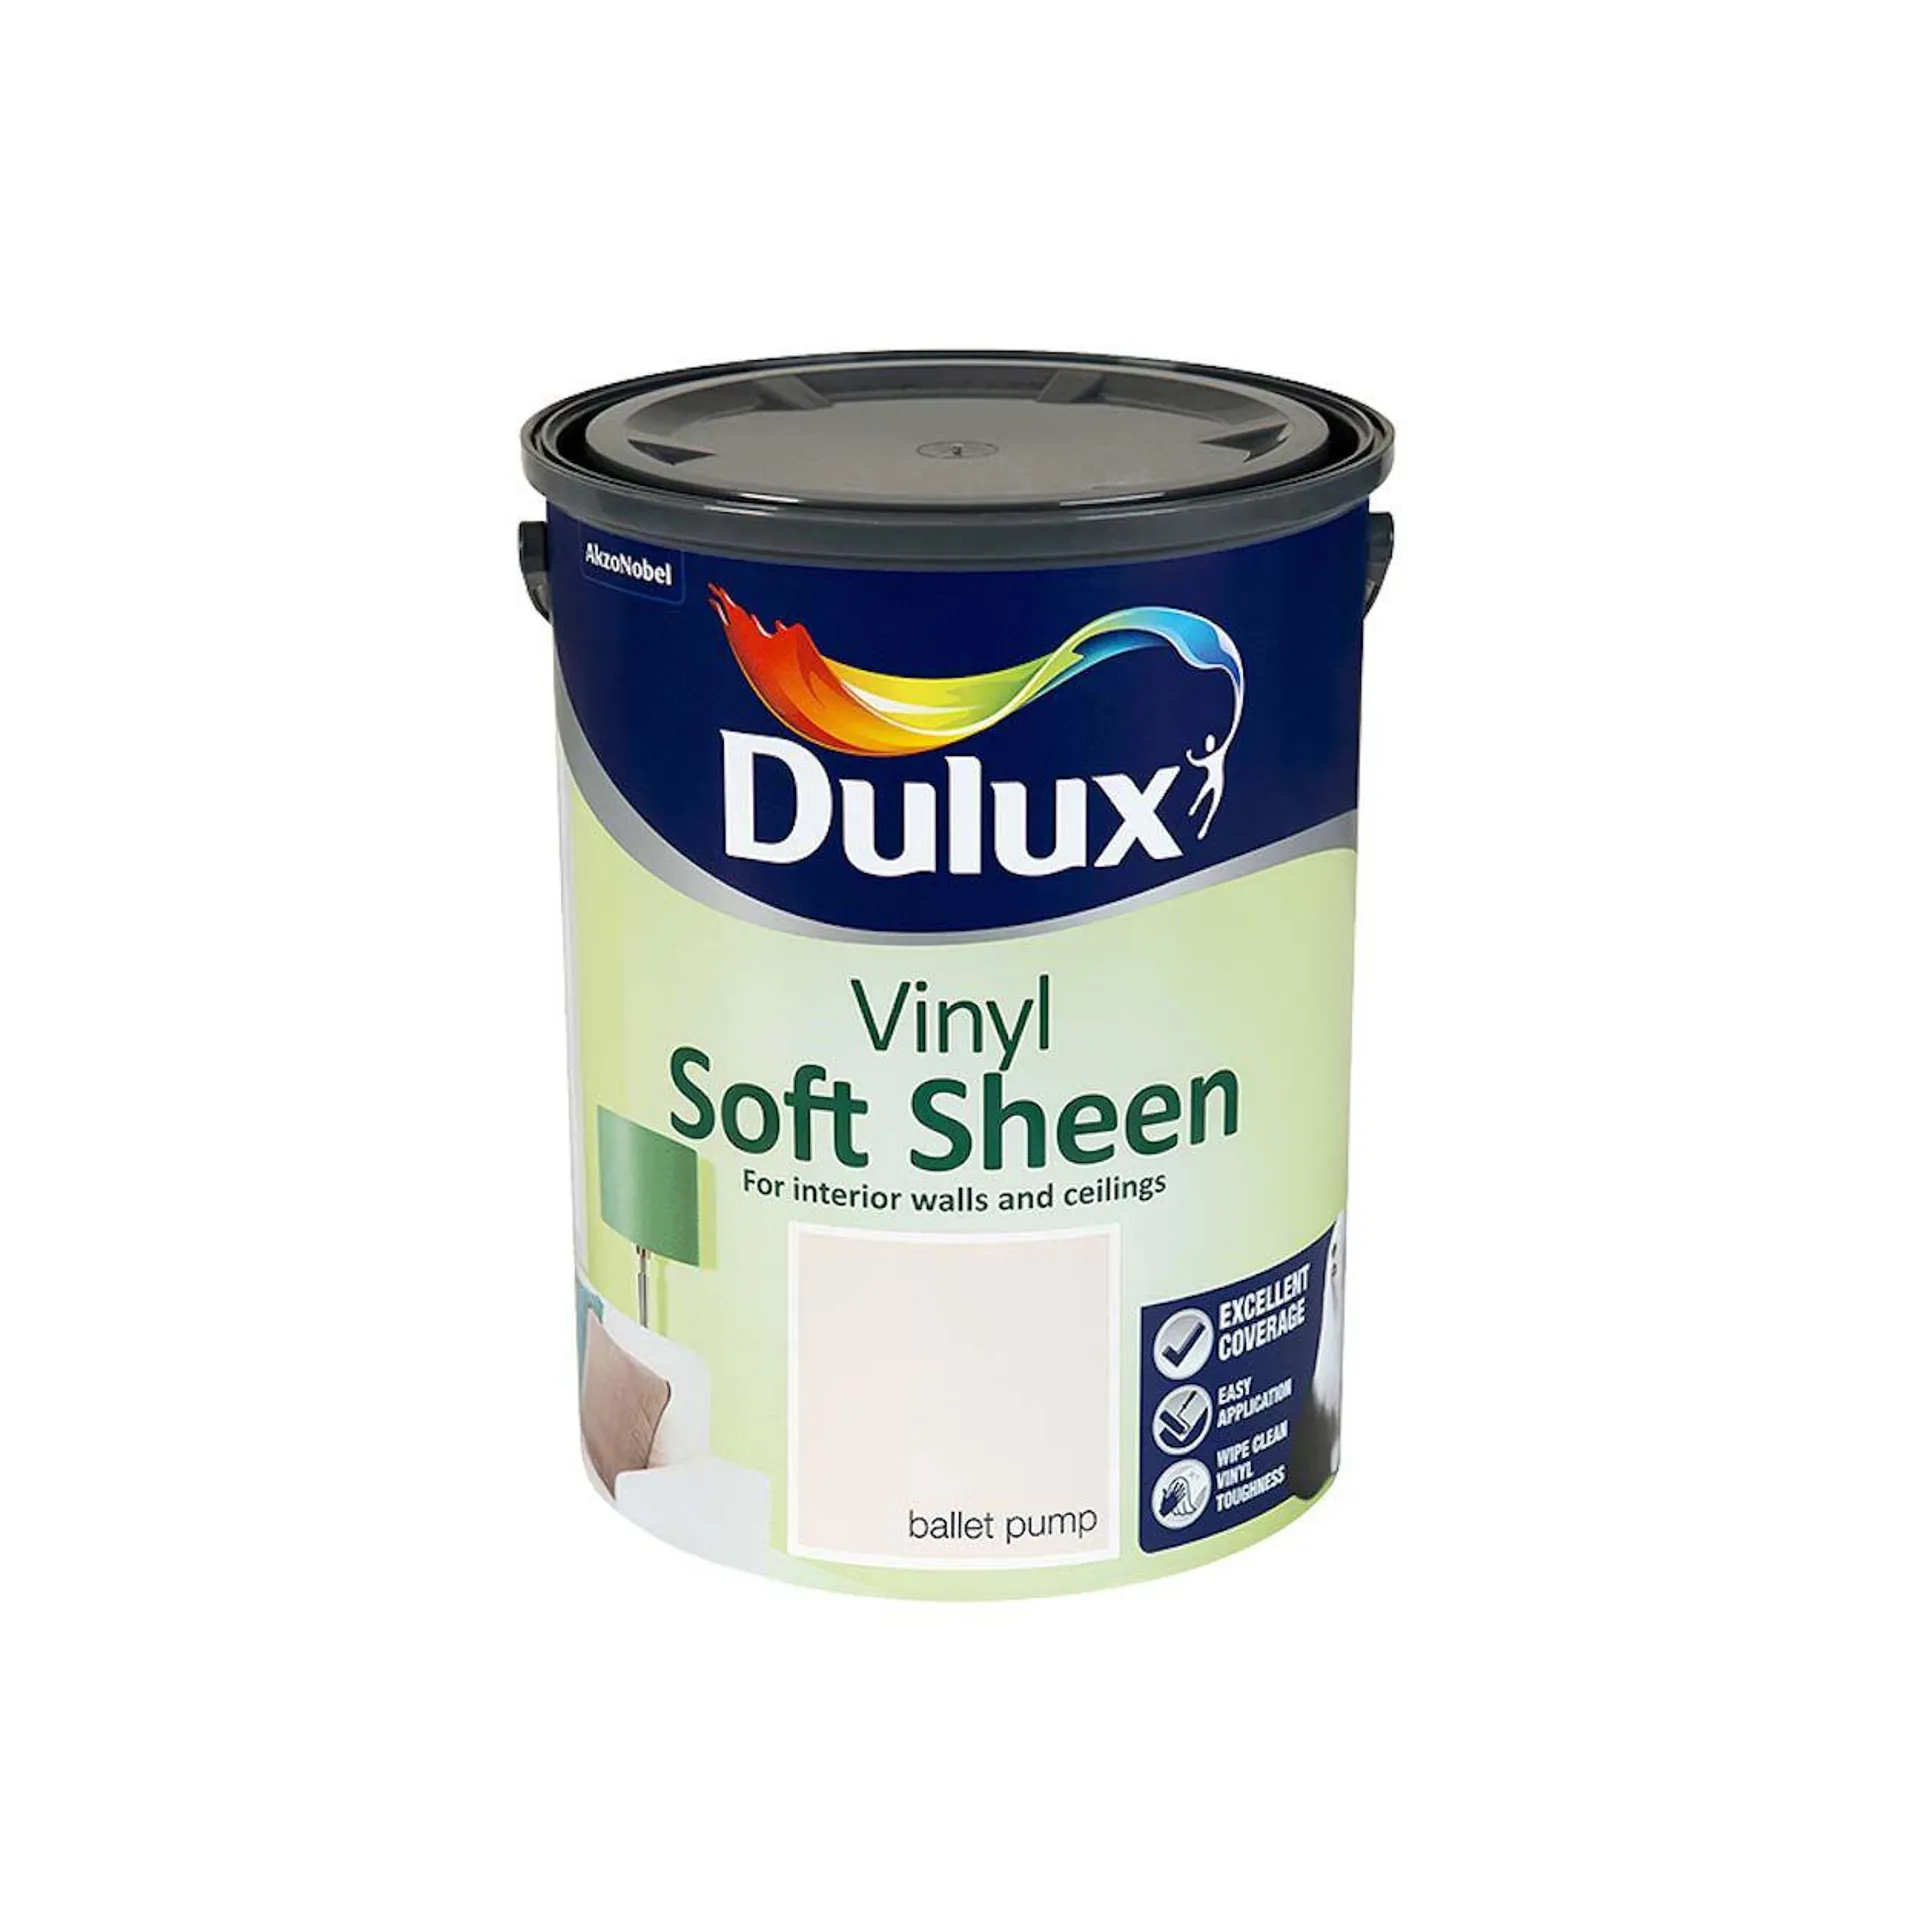 Dulux Vinyl Soft Sheen Ballet Pump 5L